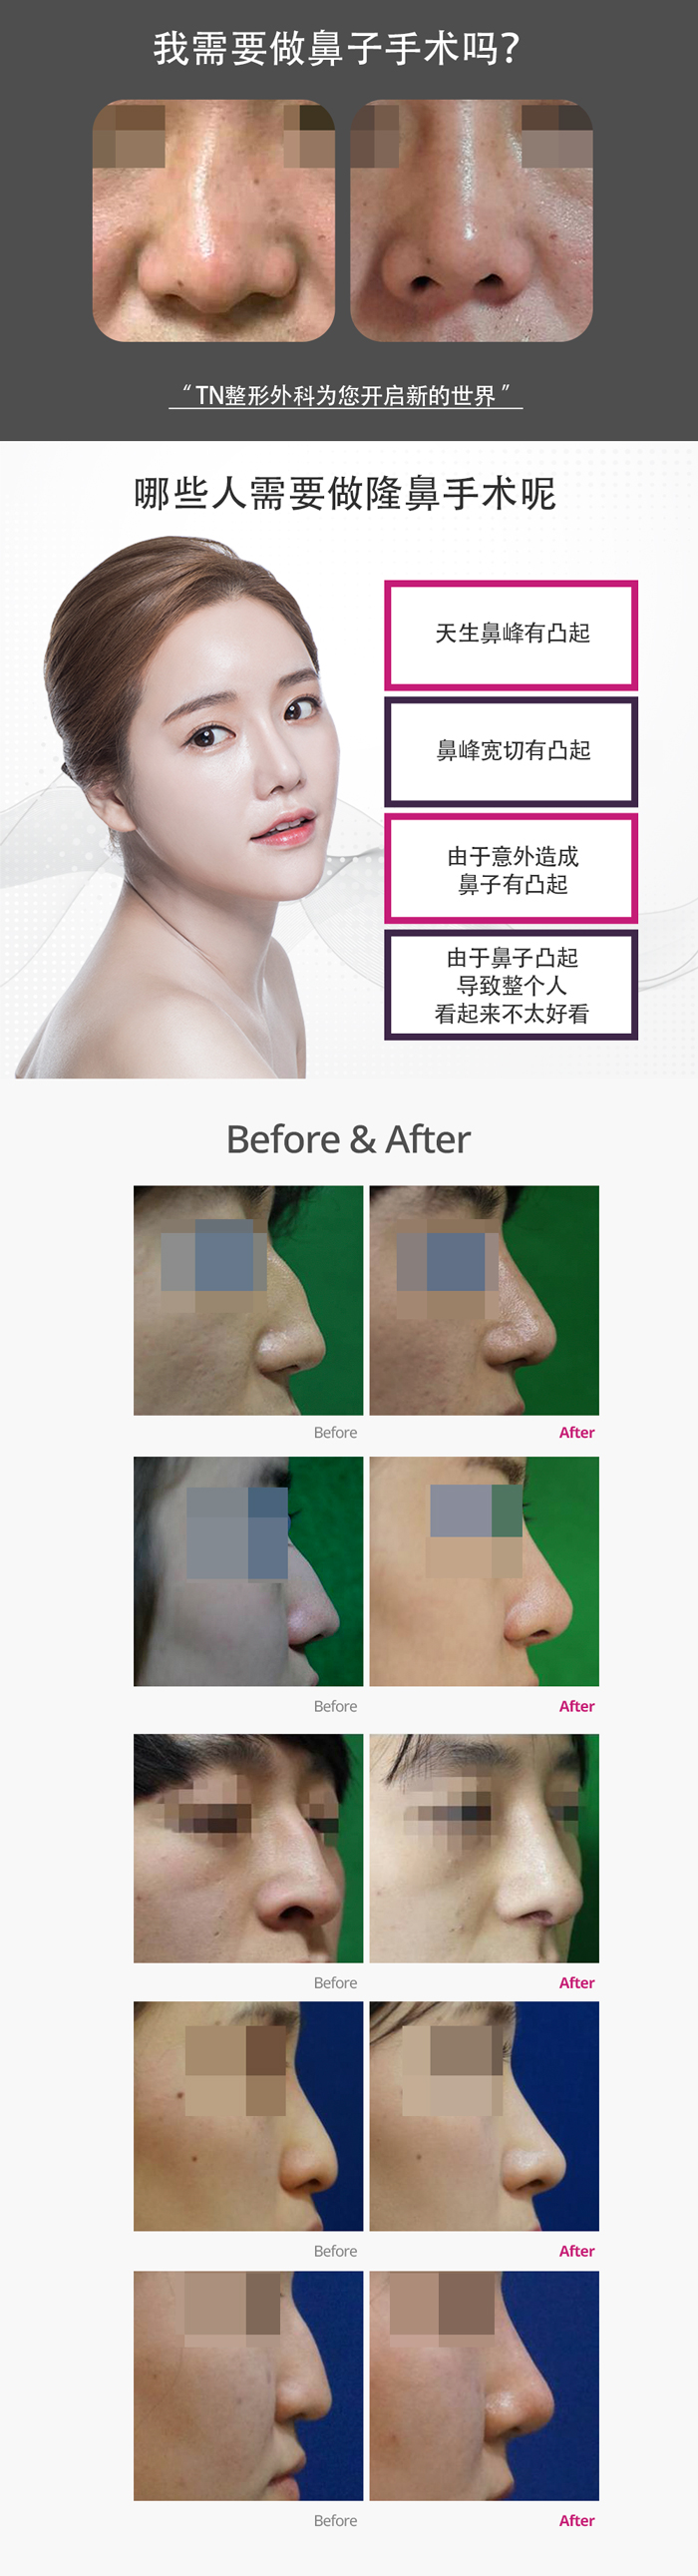 韩国TN整形外科 X AllaboutMEI 隆鼻术 特价活动 / hump nose surgery with the lowest price in All about MEI